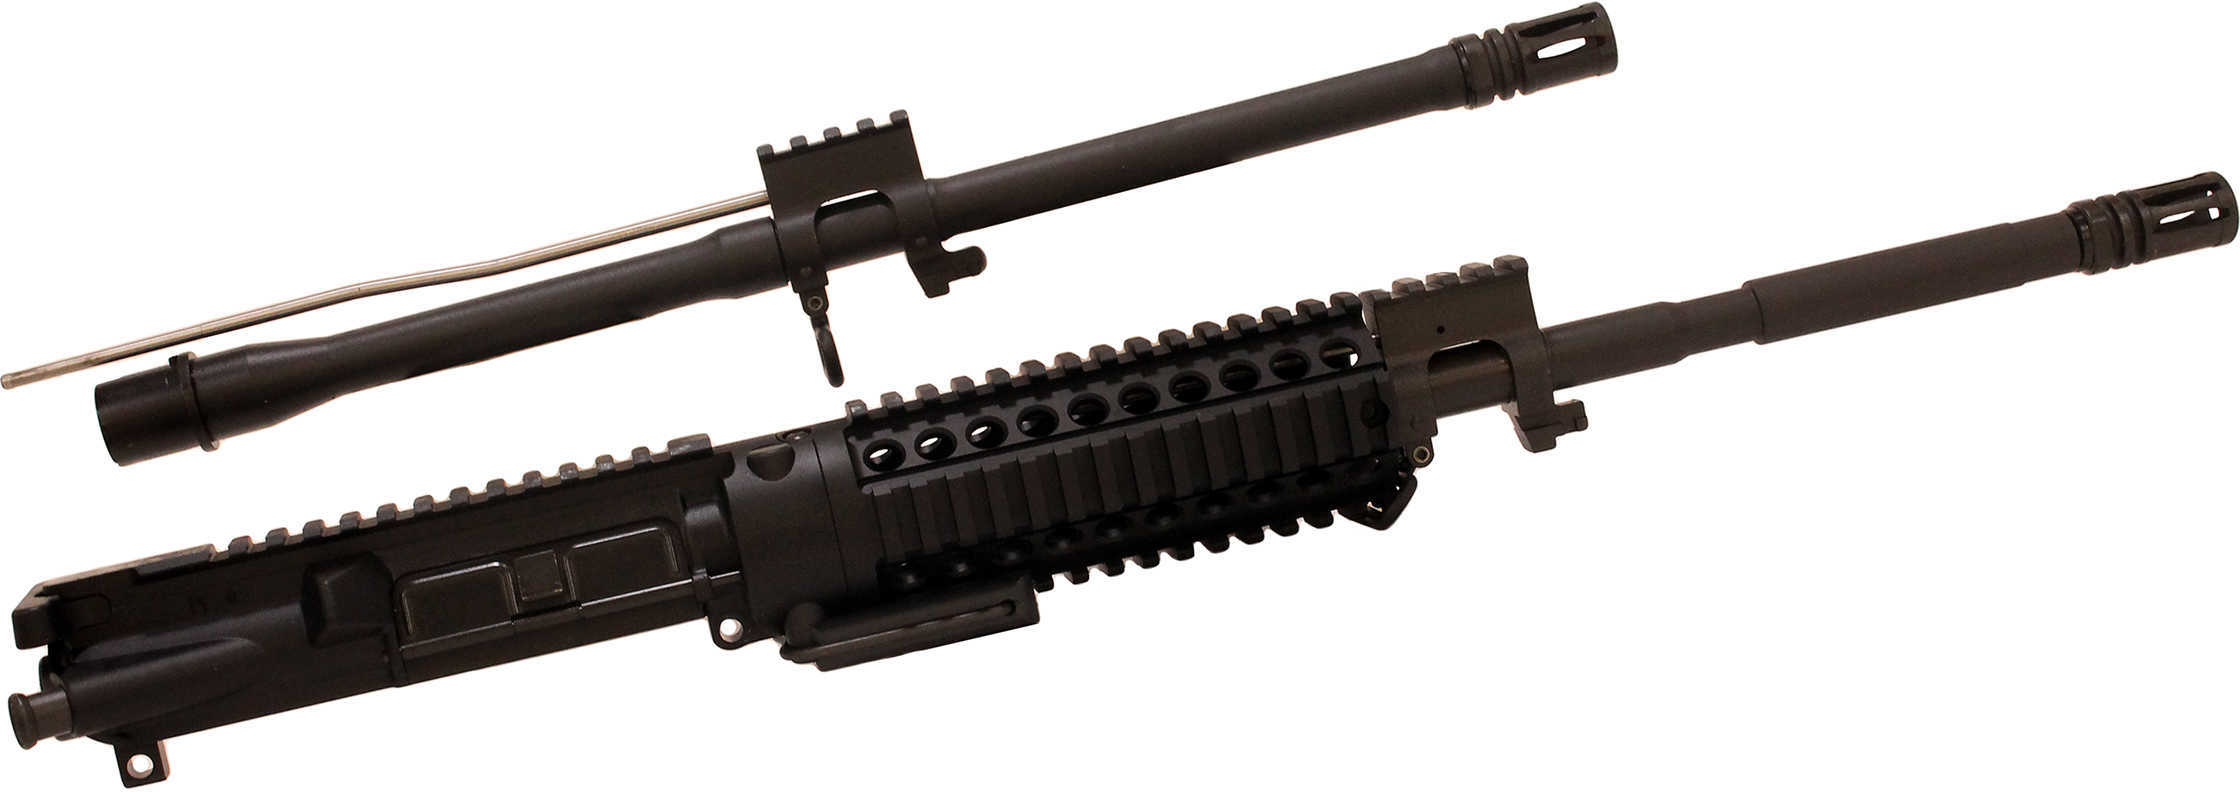 Windham Weaponry KITMCS1 Multi-Caliber Upper 223 Remington/300 AAC Blackout 16" 4150 Chrome Moly Vanadium Steel